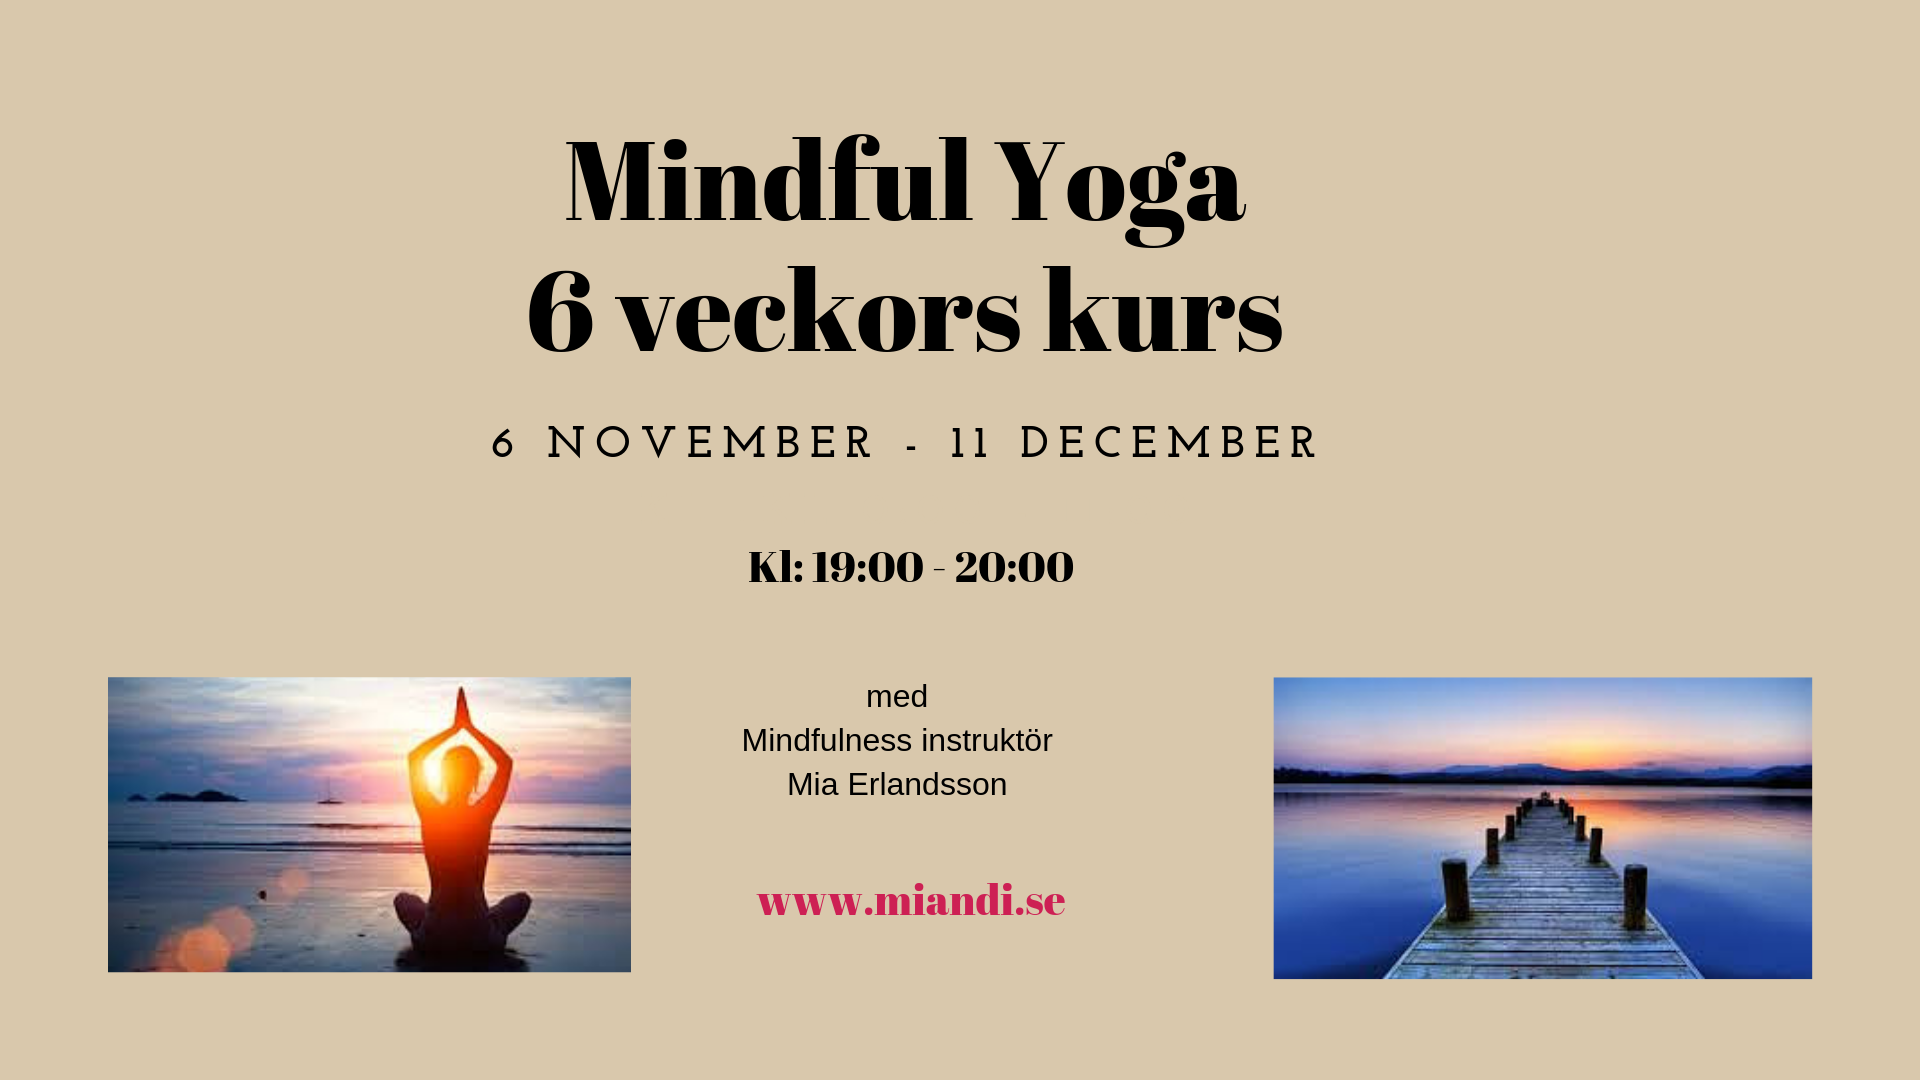 Mindful Yoga, 6 veckors kurs